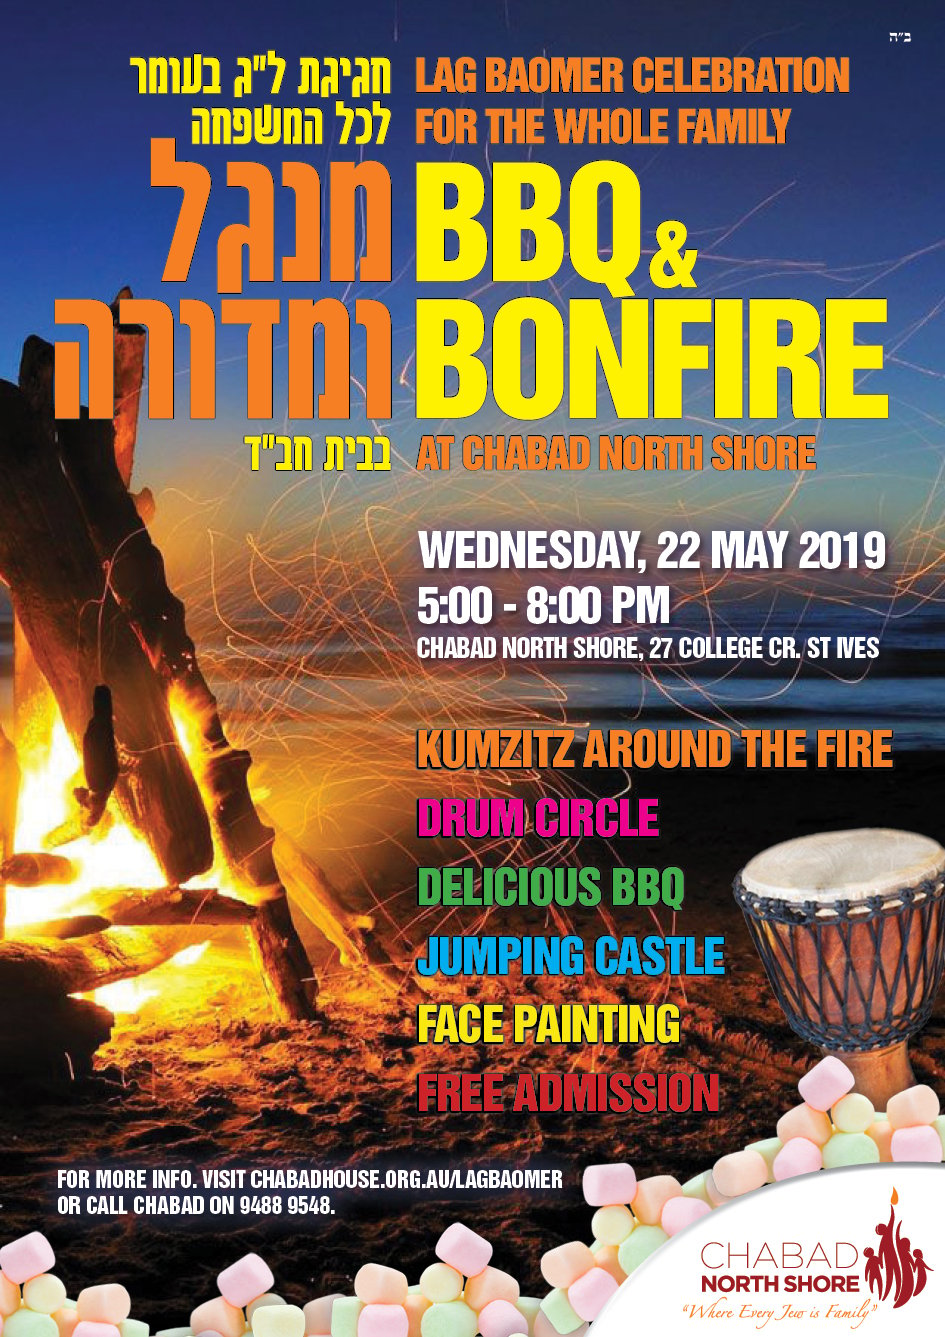 Lag Baomer Bbq & Bonfire - Wednesday, 22 May 2019 @ 5:00-8:00 Pm - Chabad North Shore